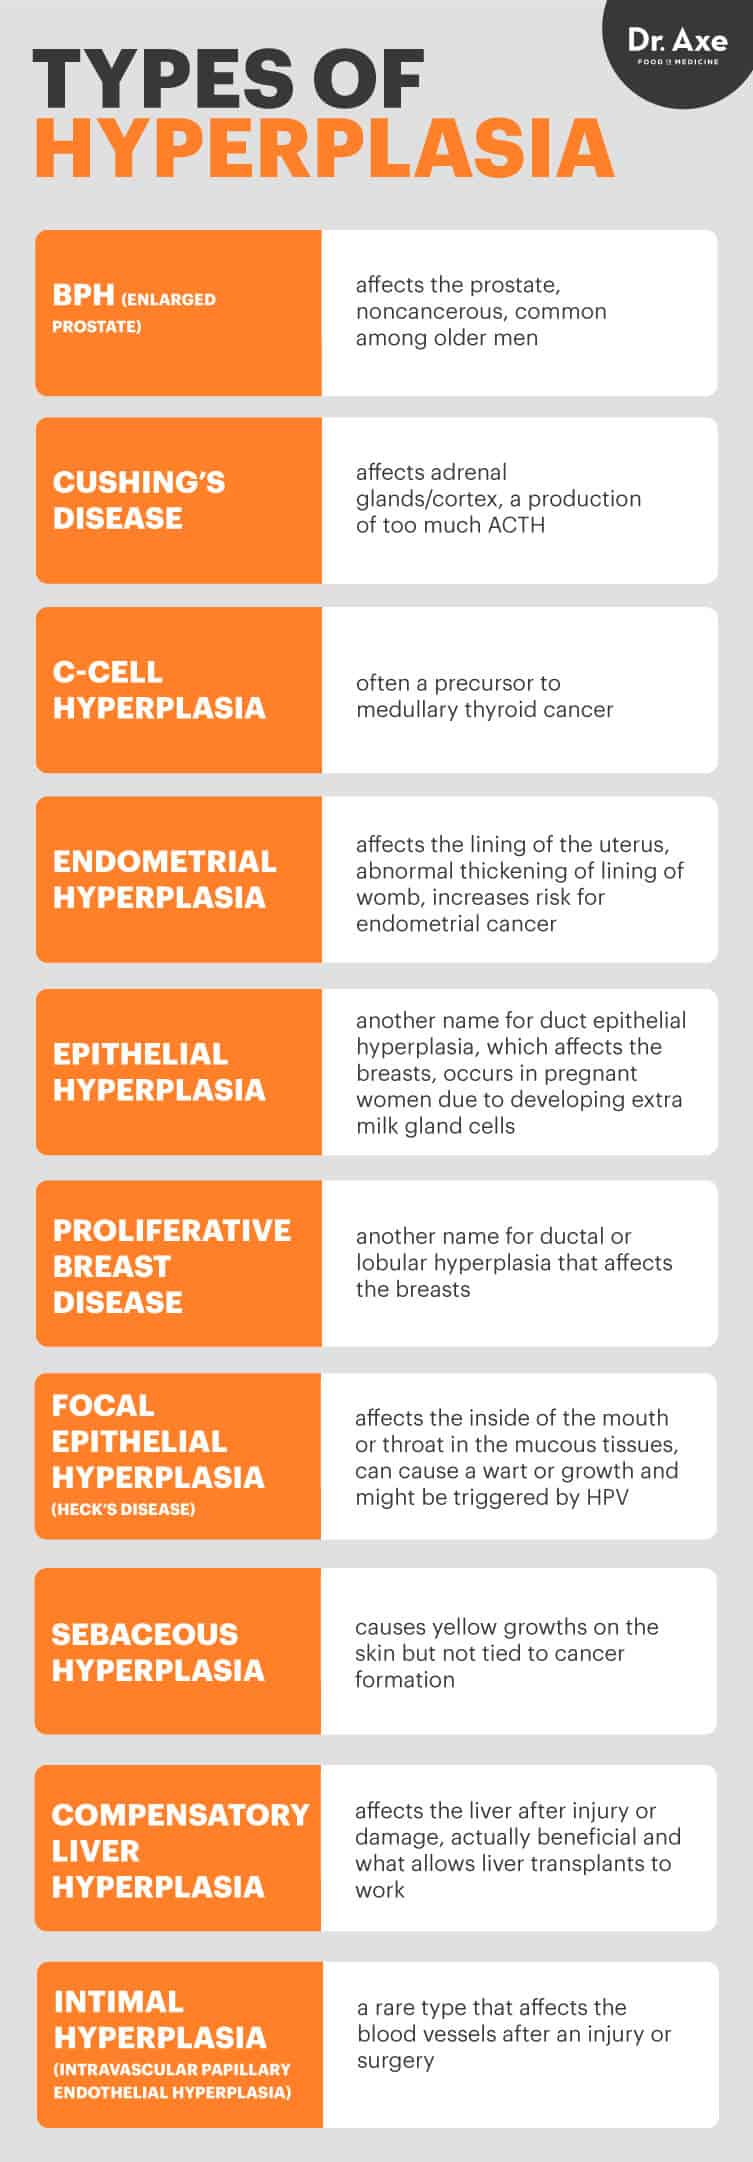 Types of hyperplasia - Dr. Axe